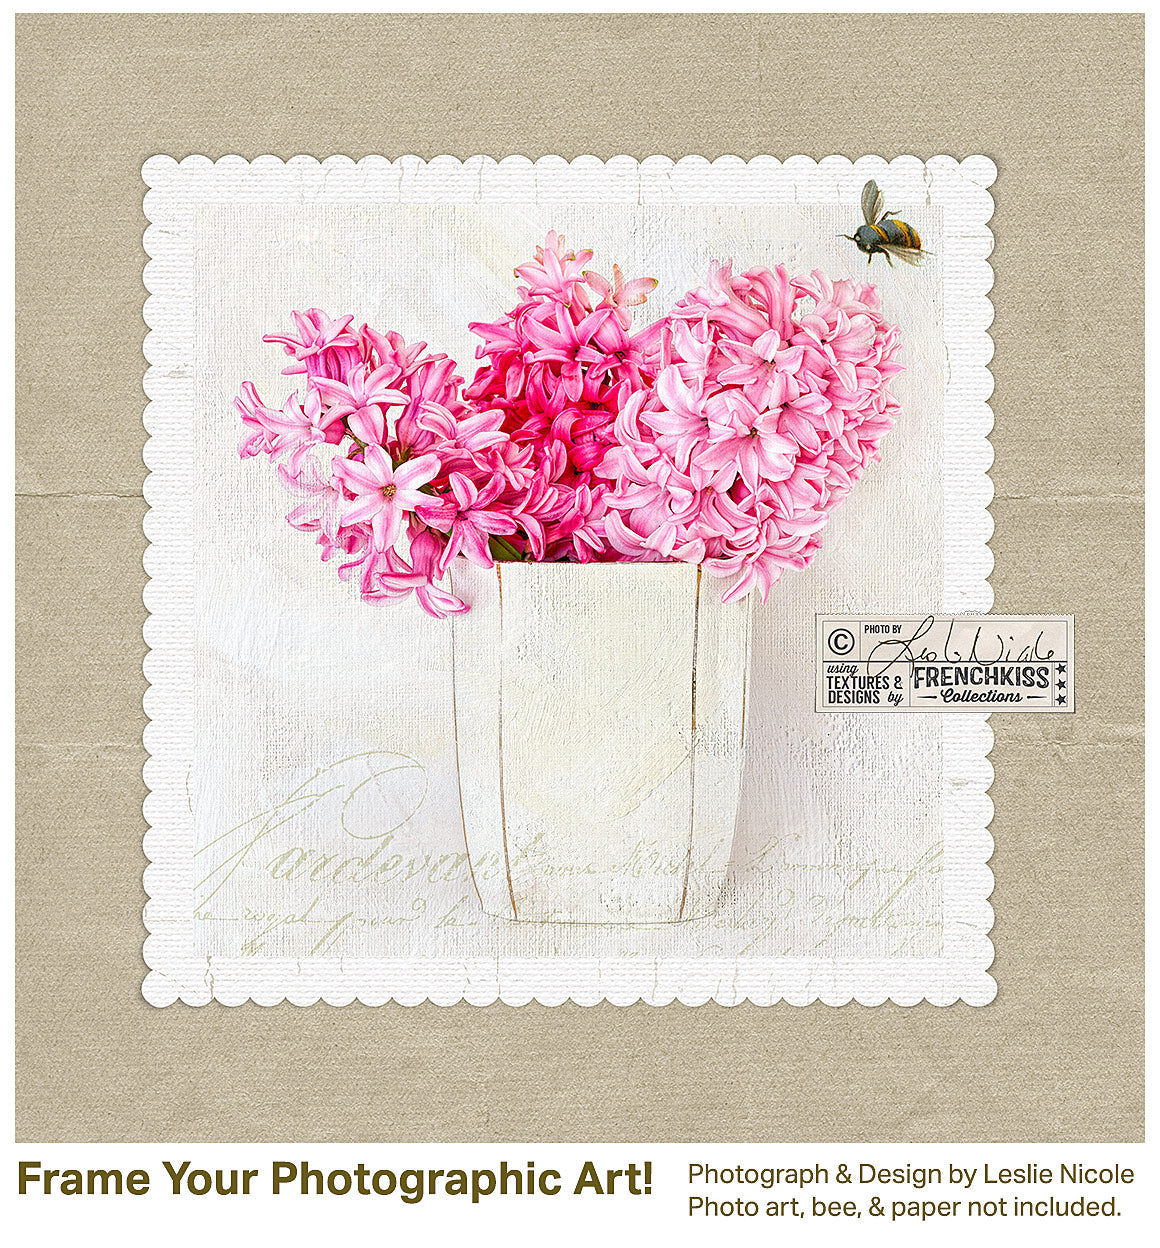 Fine art textured floral by Leslie Nicole using the Love Ya digital frames.